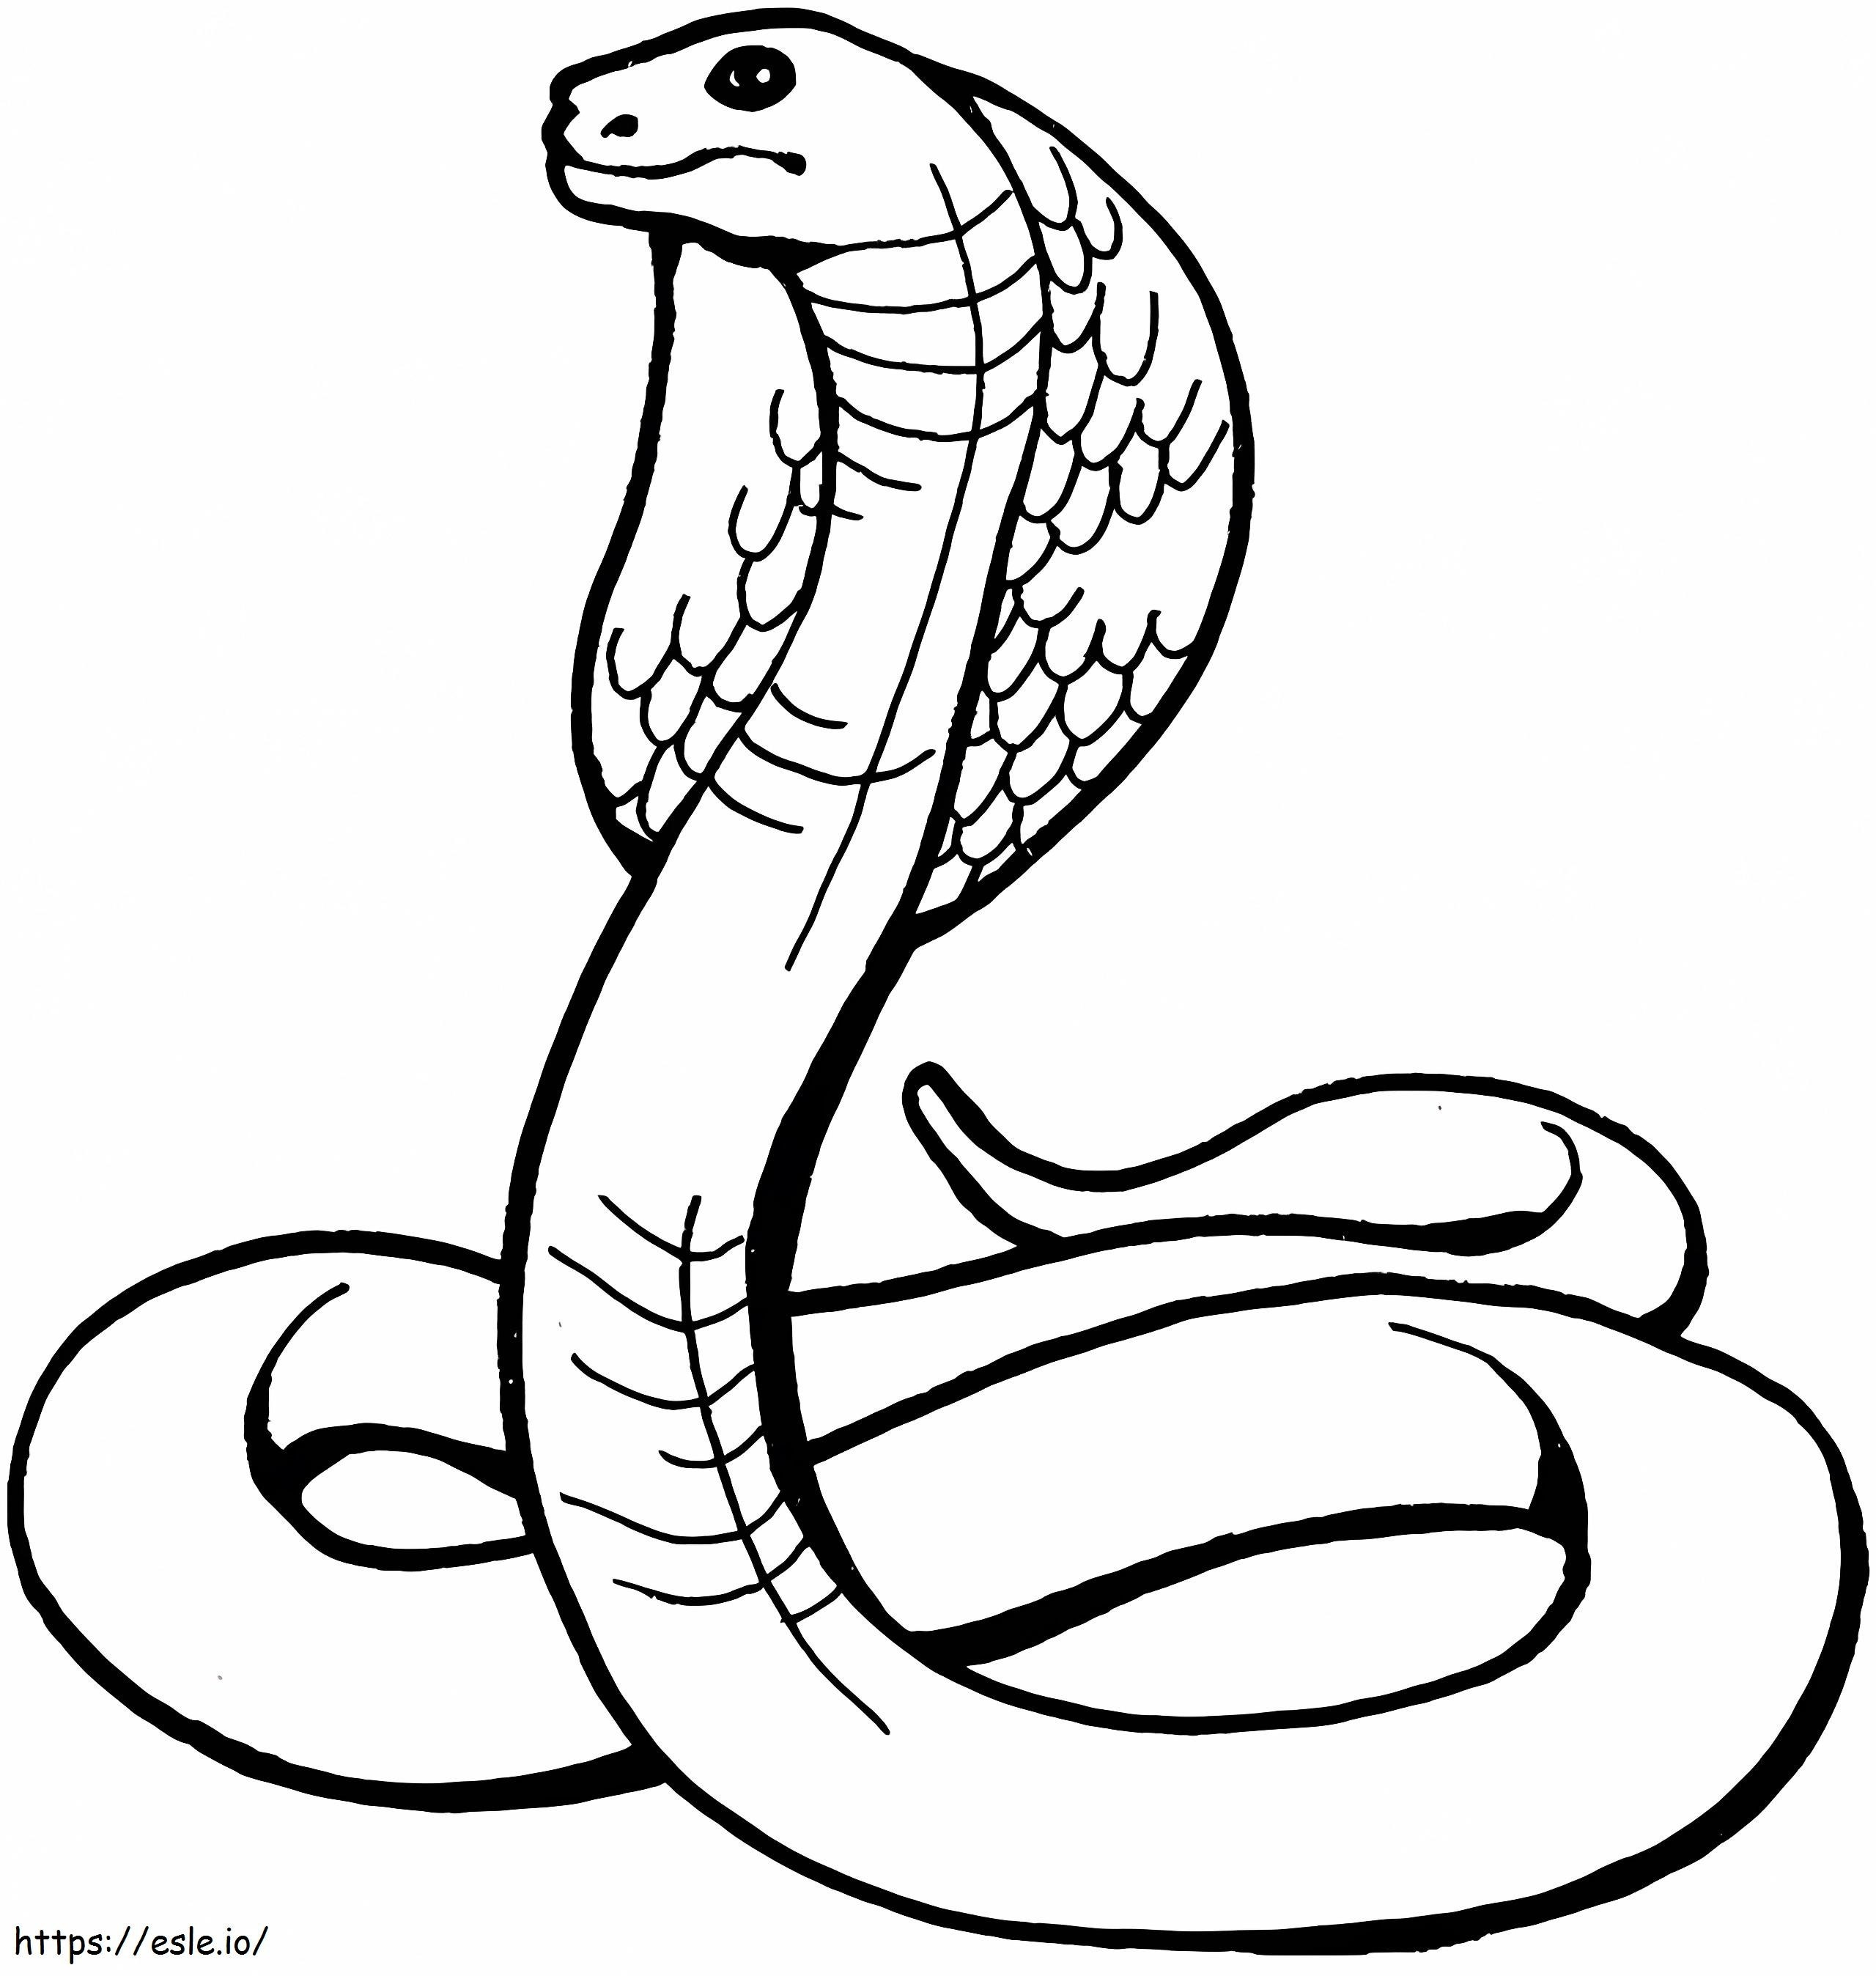 1530675670 Serpente Cobra A4 da colorare